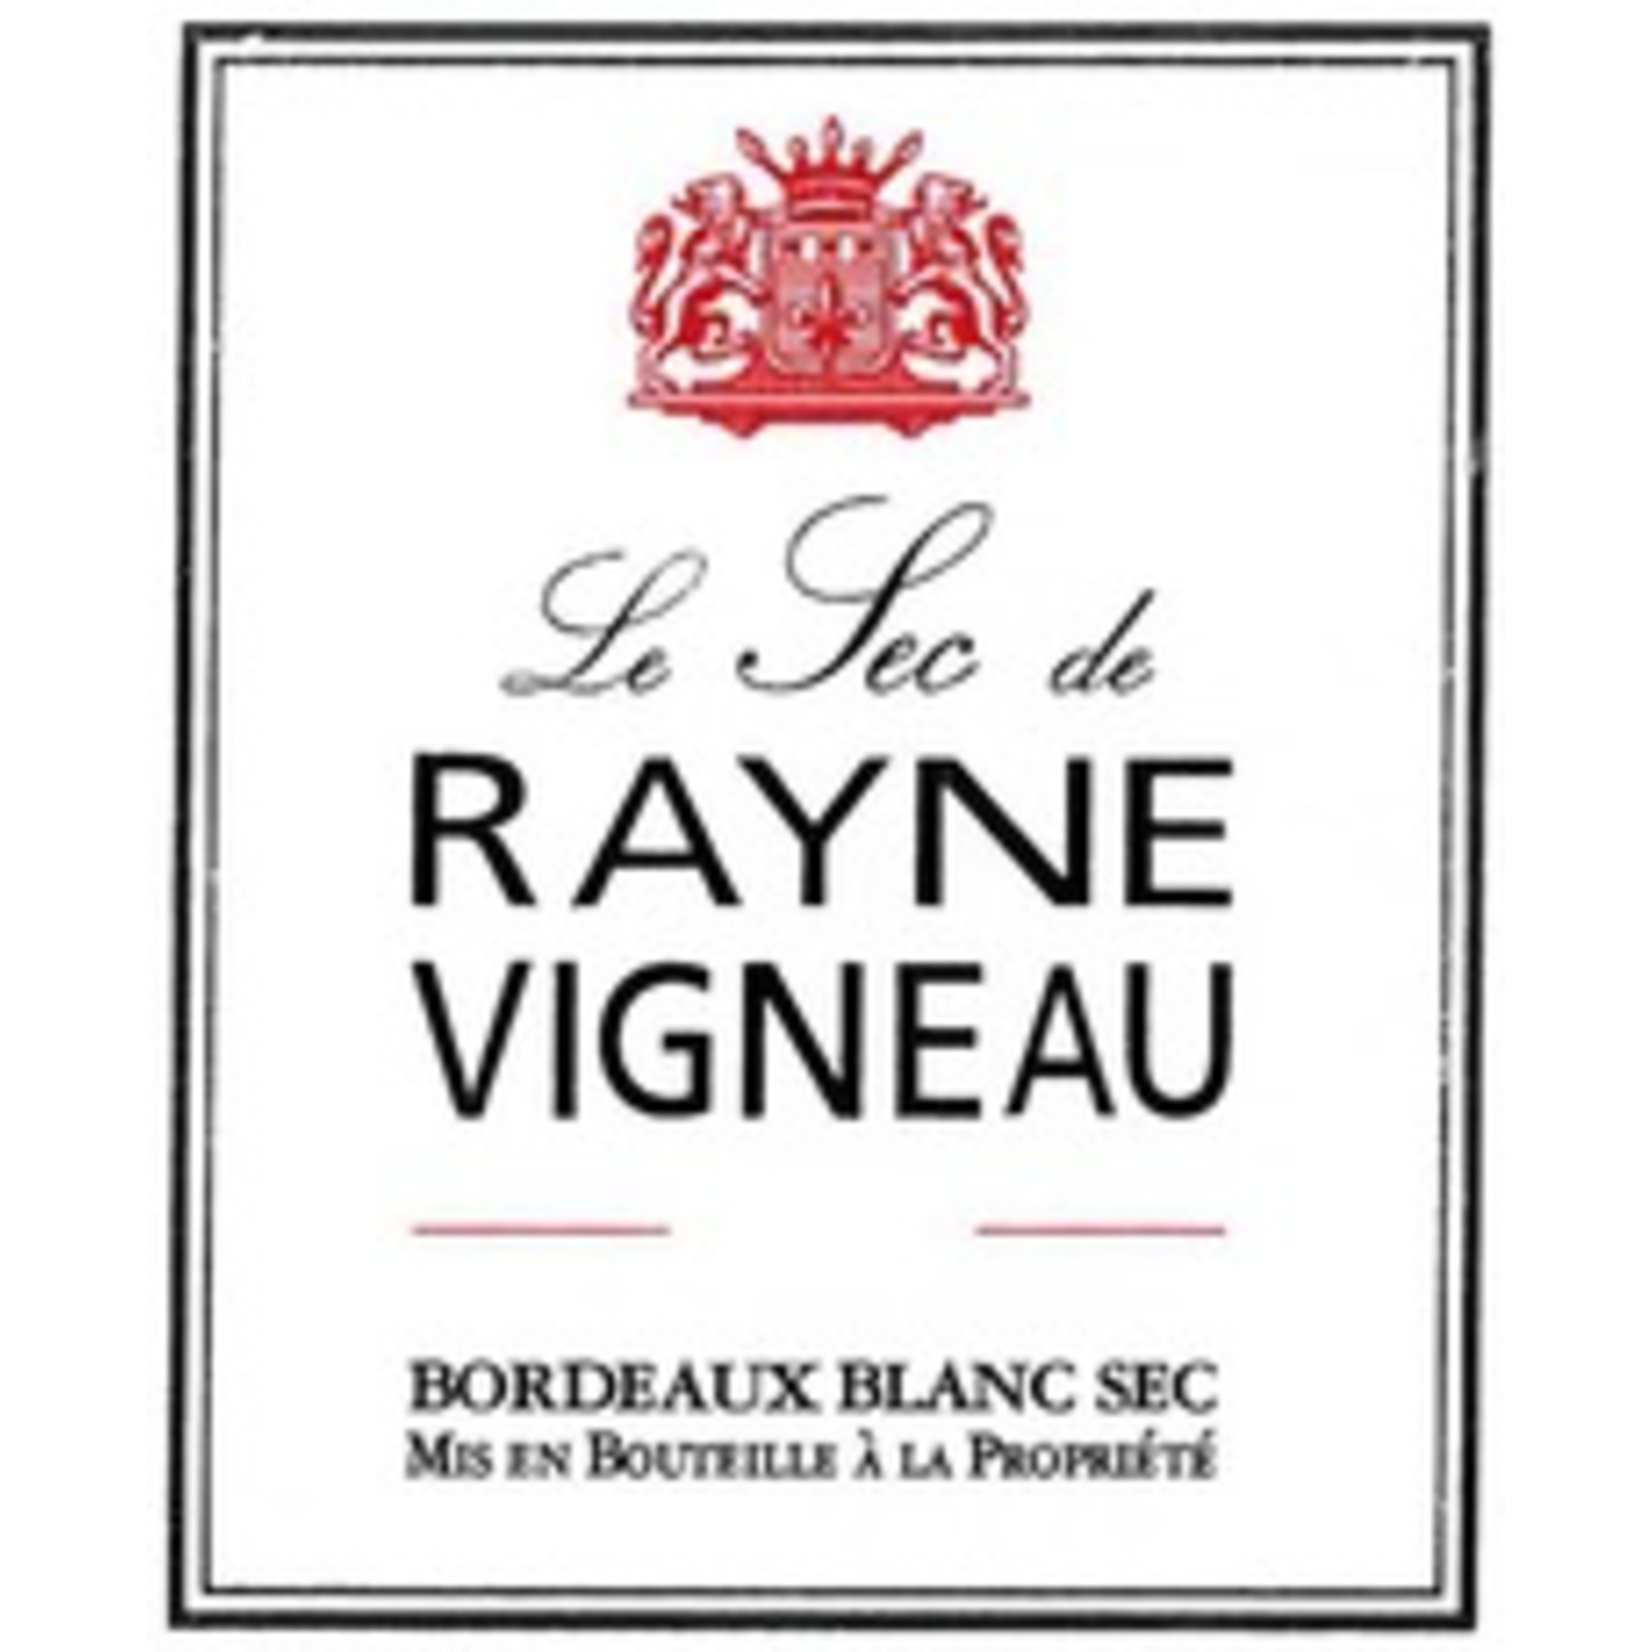 Wine Chateau de Rayne Vigneau Le Sec de Rayne Vigneau 2018